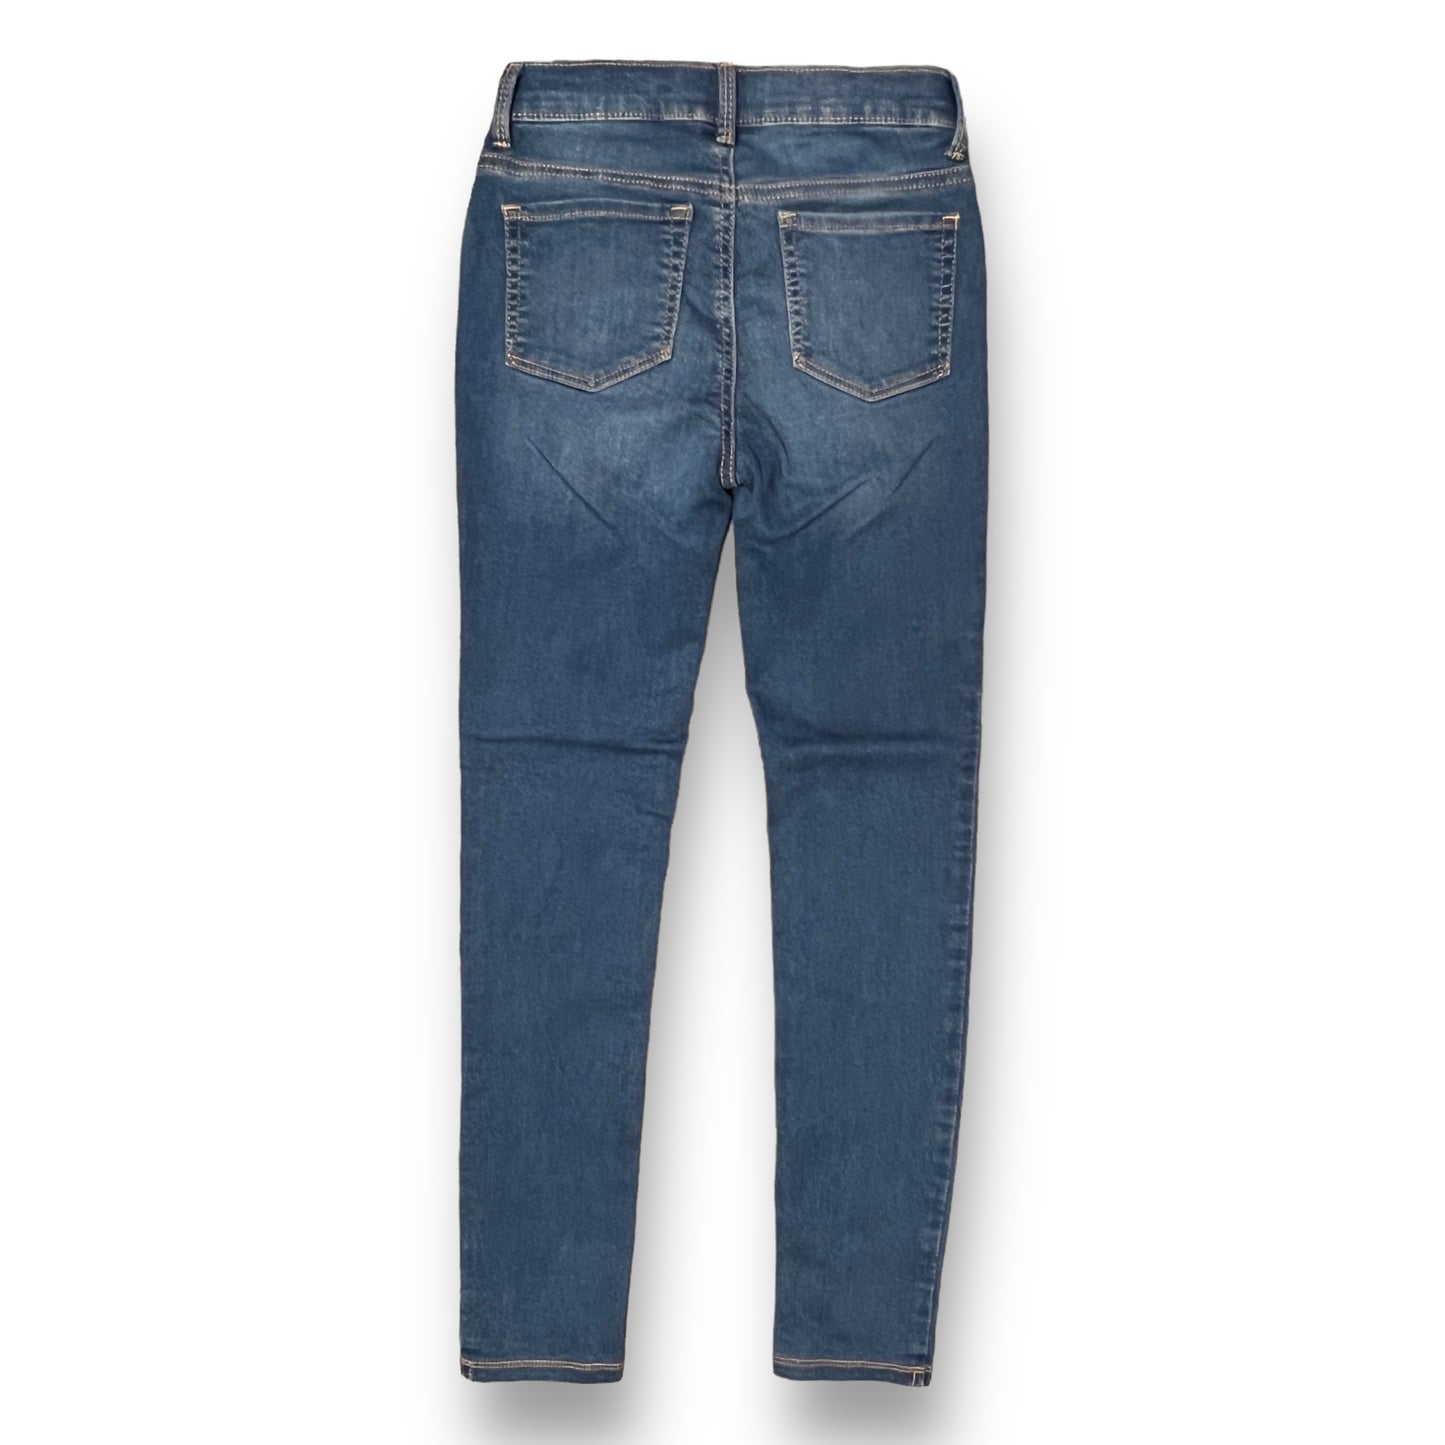 Girls Gap Size 12 Dark Blue Stretch Jegging Jeans